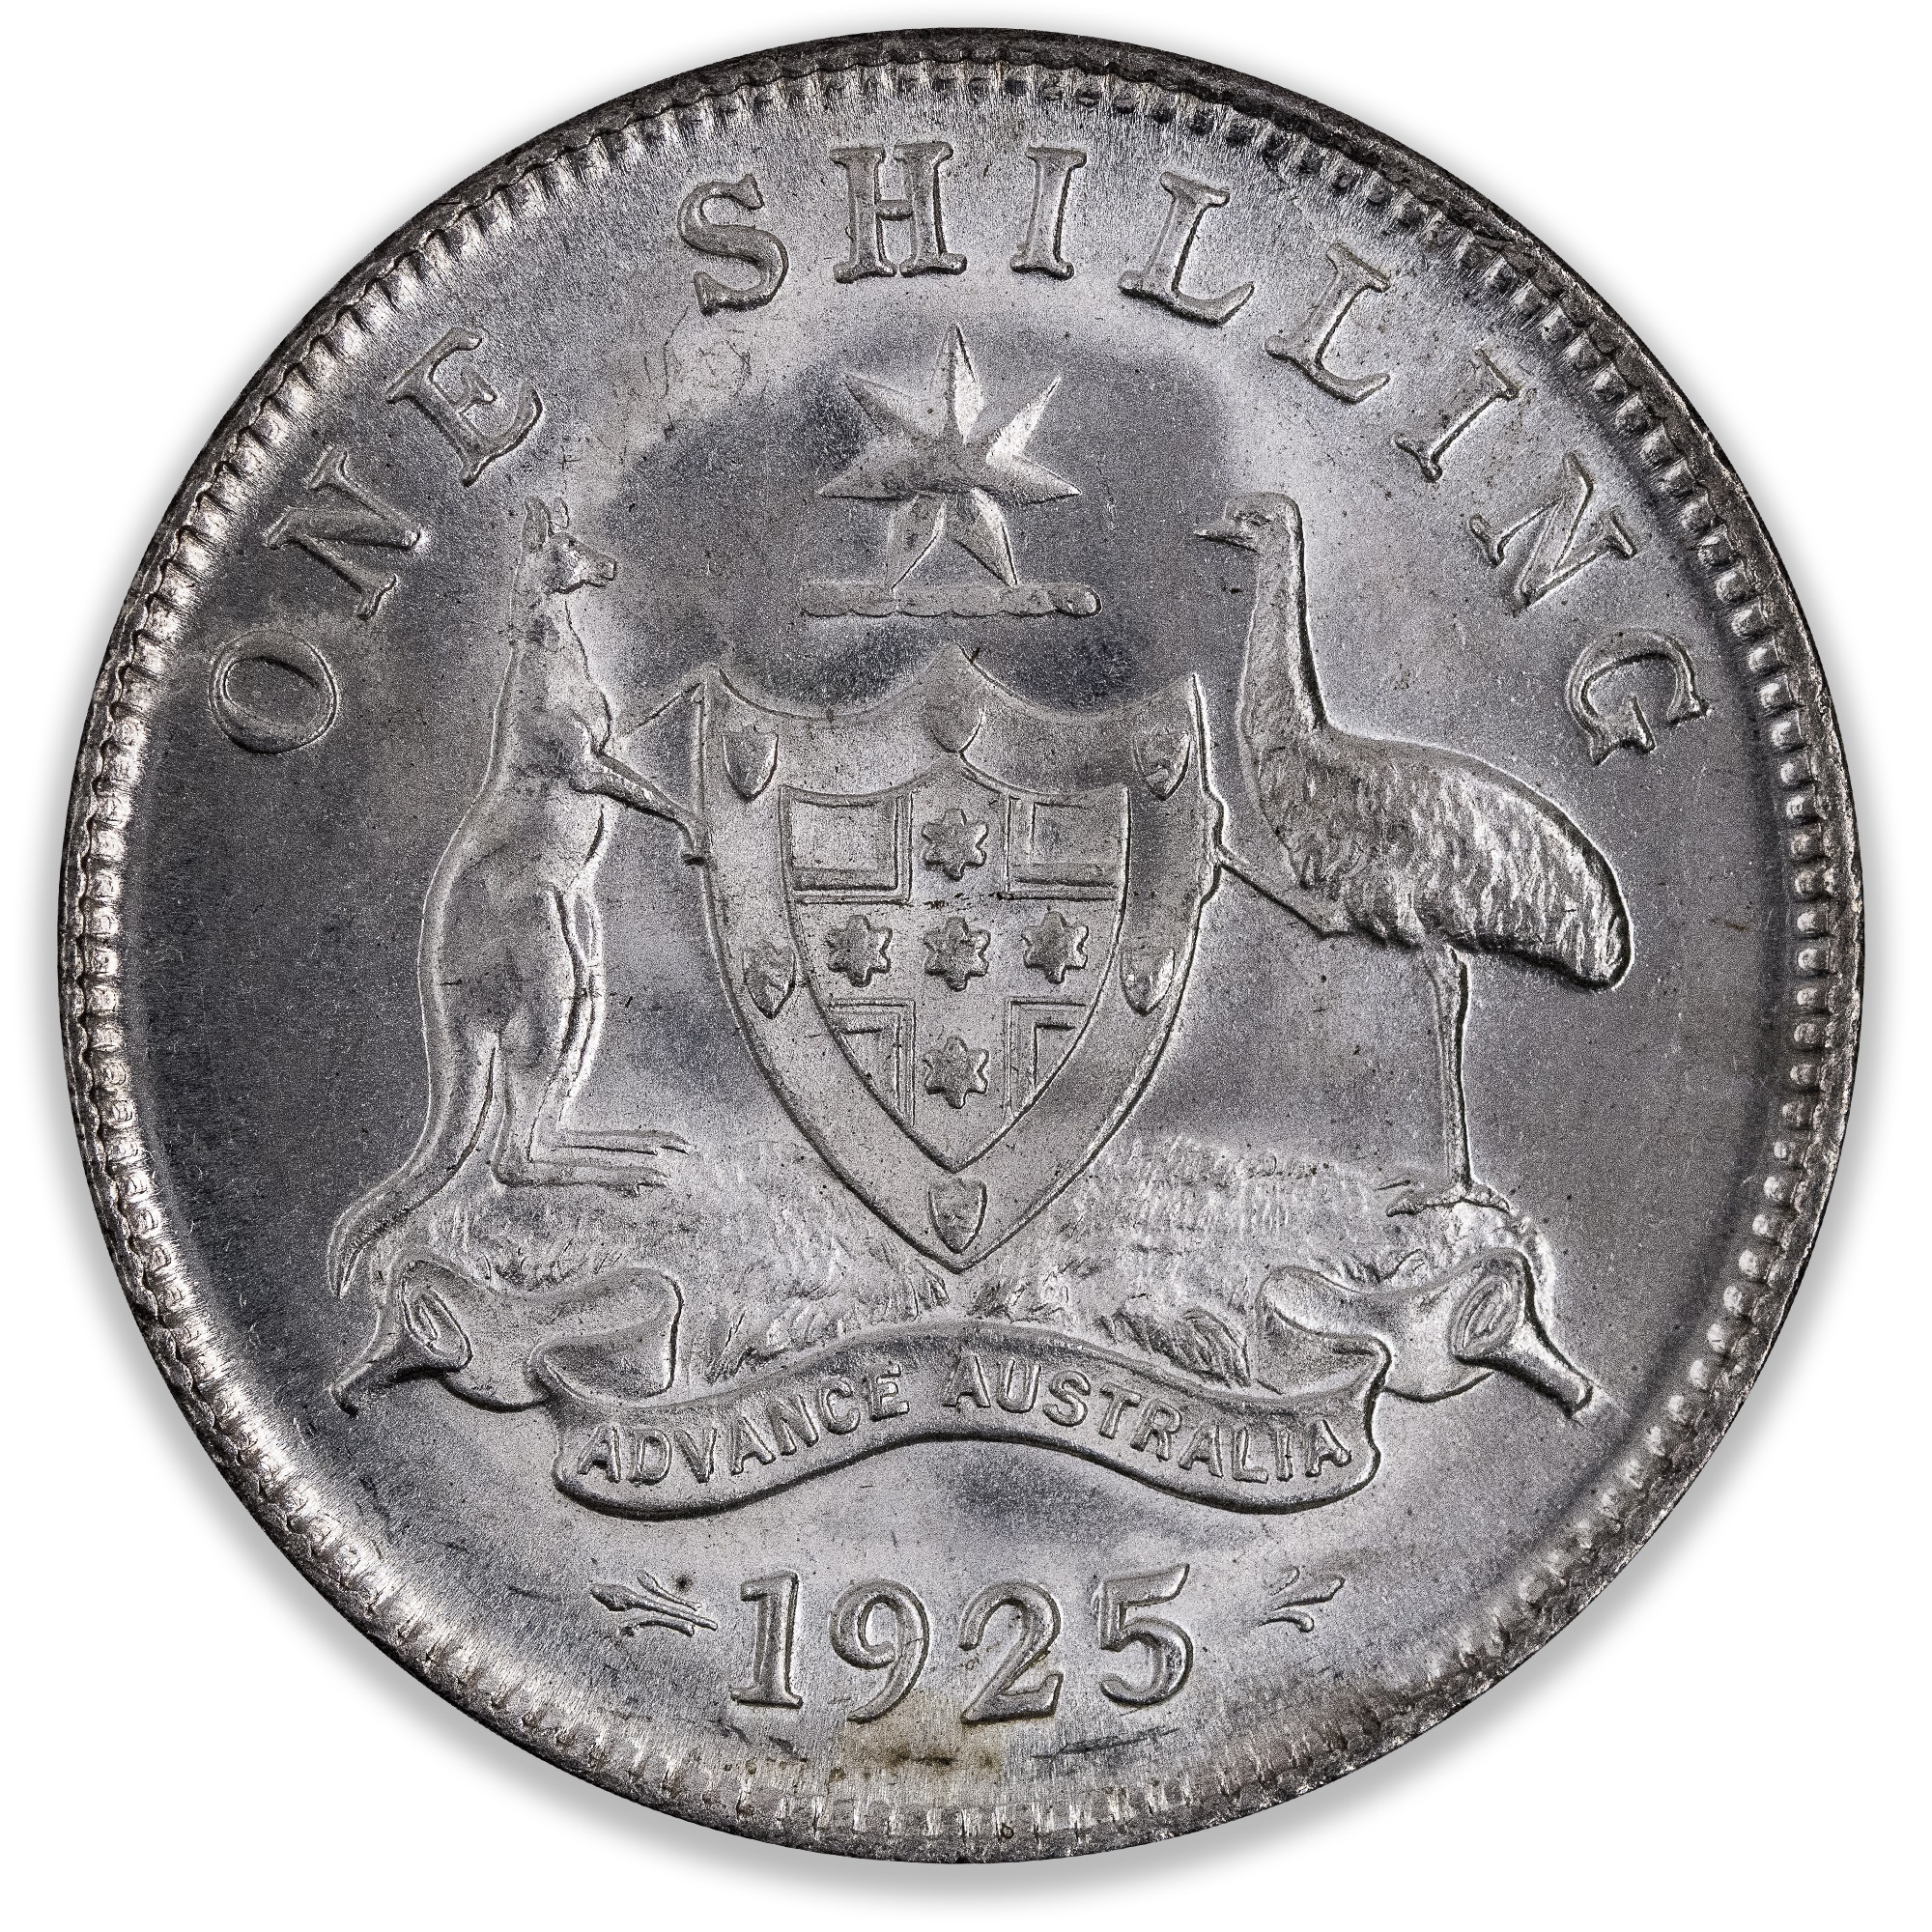 1925 Australian Shilling Choice Uncirculated